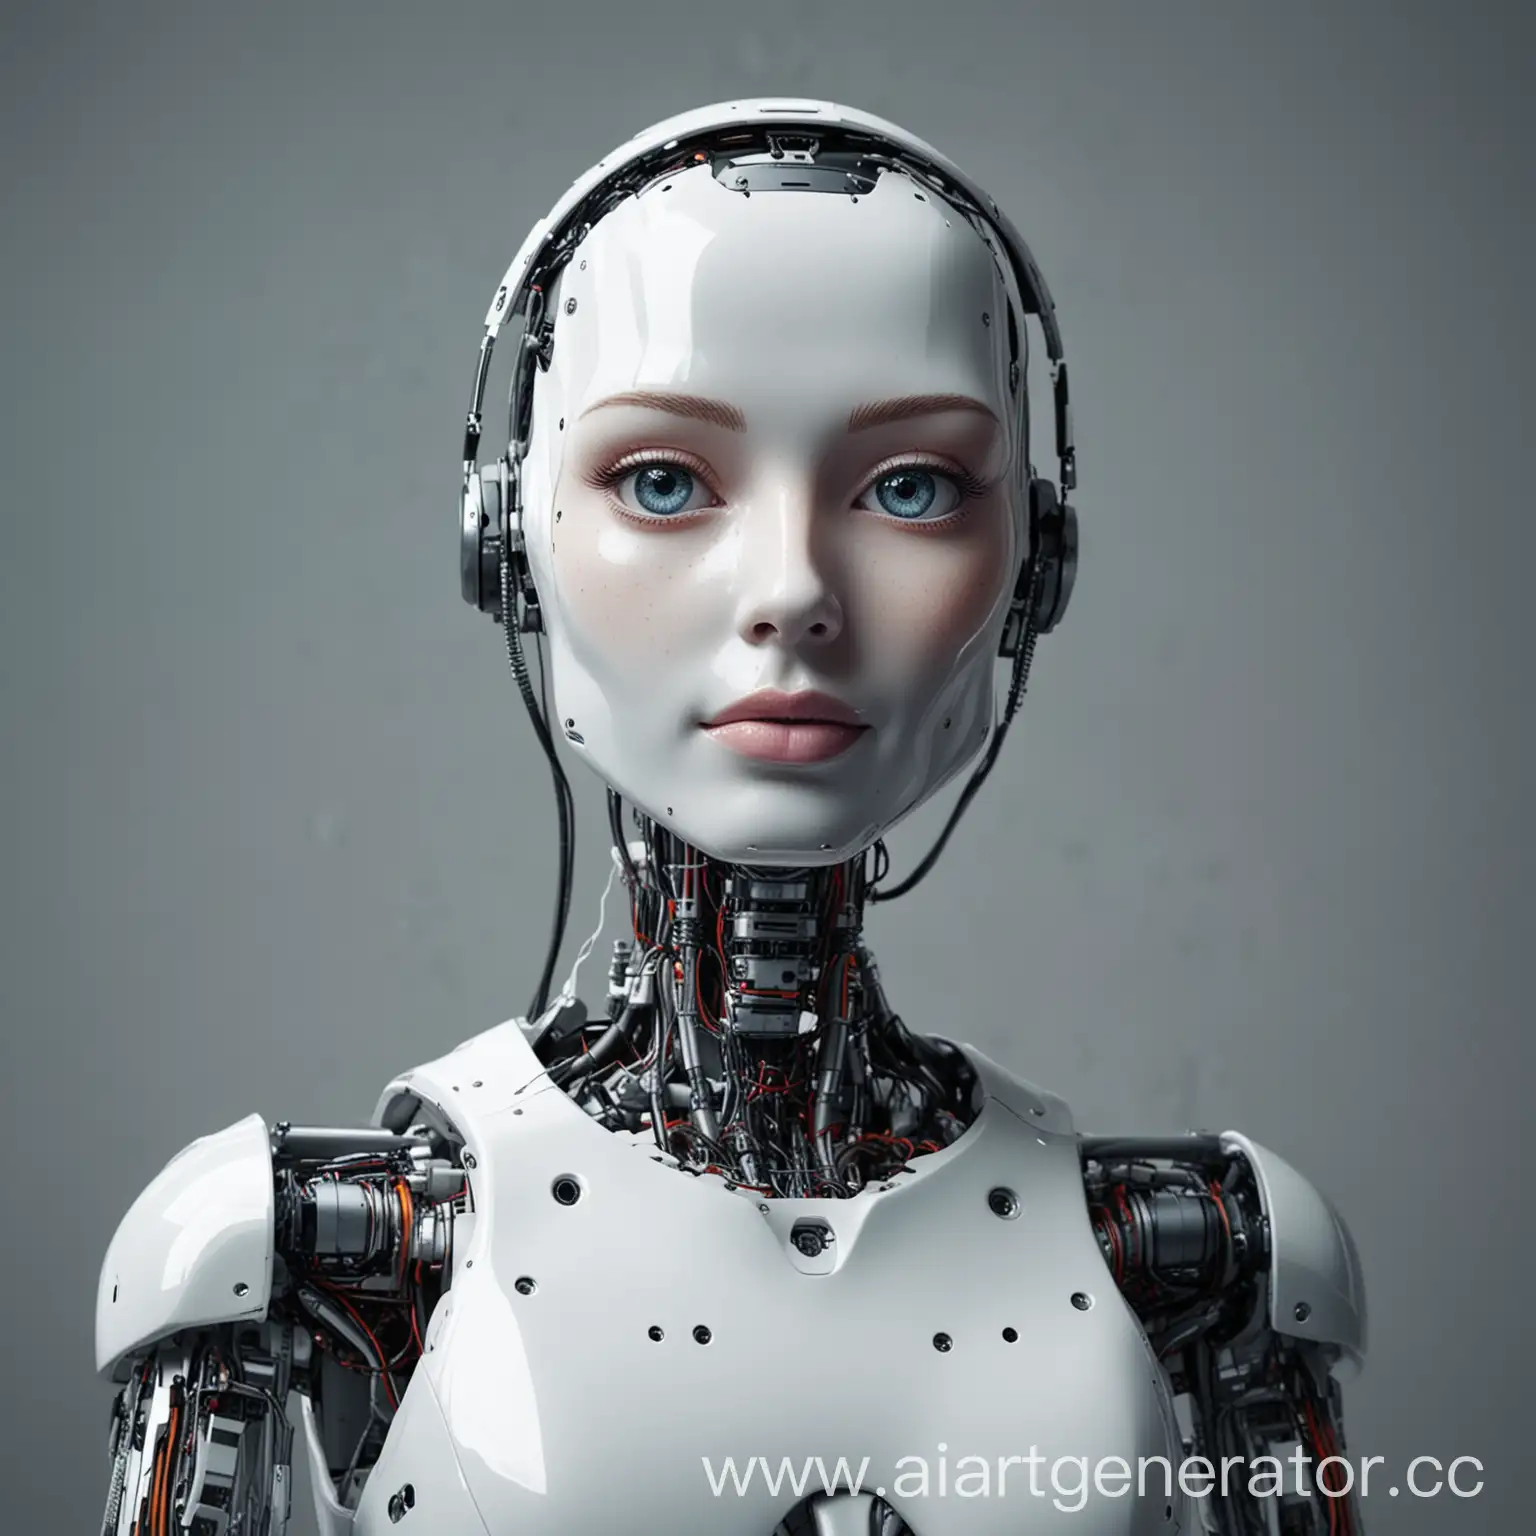 Futuristic-Robot-Artificial-Intelligence-Concept